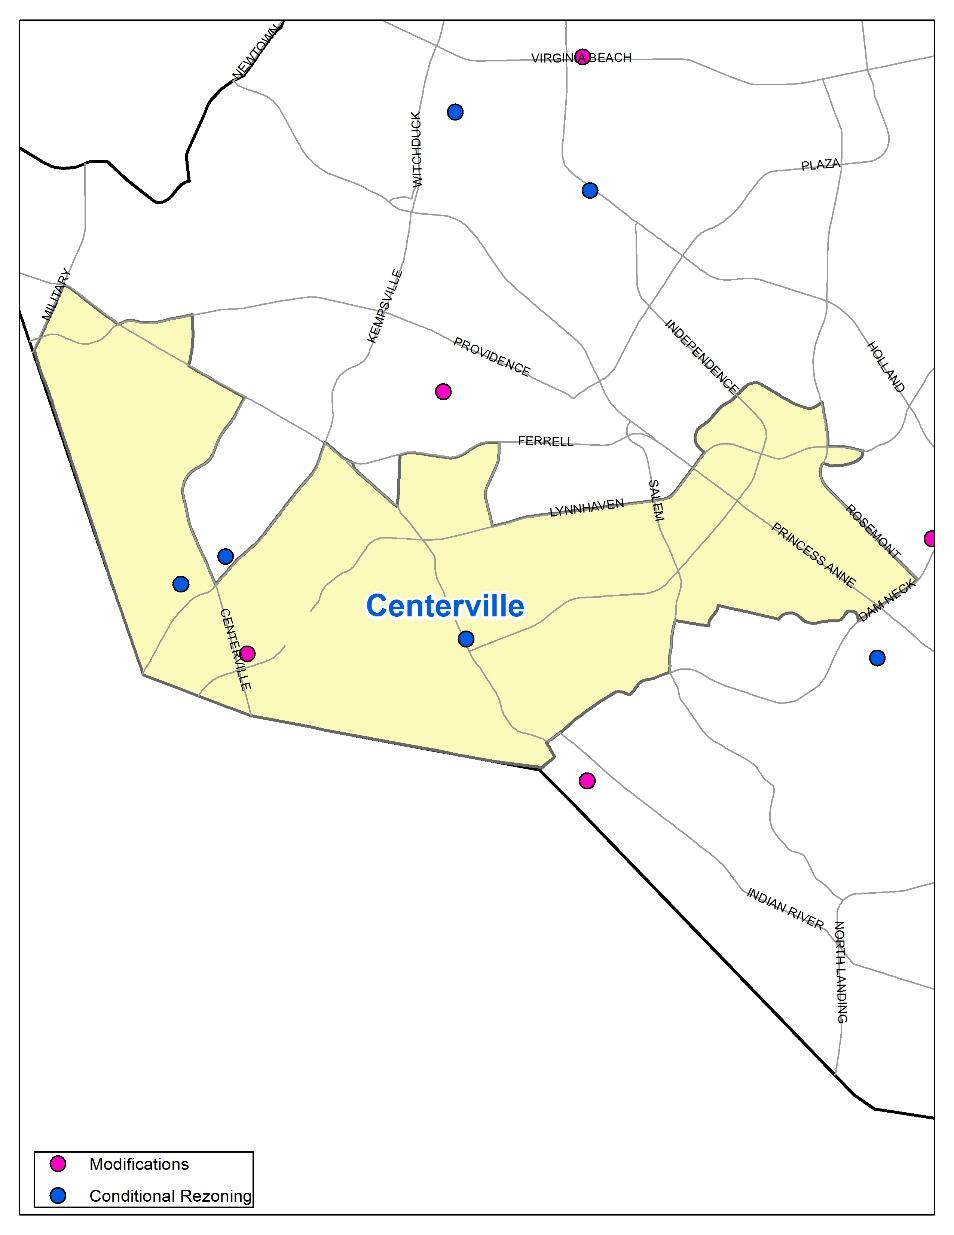 Centerville 2 Conditional Rezonings 1 Apartment 1